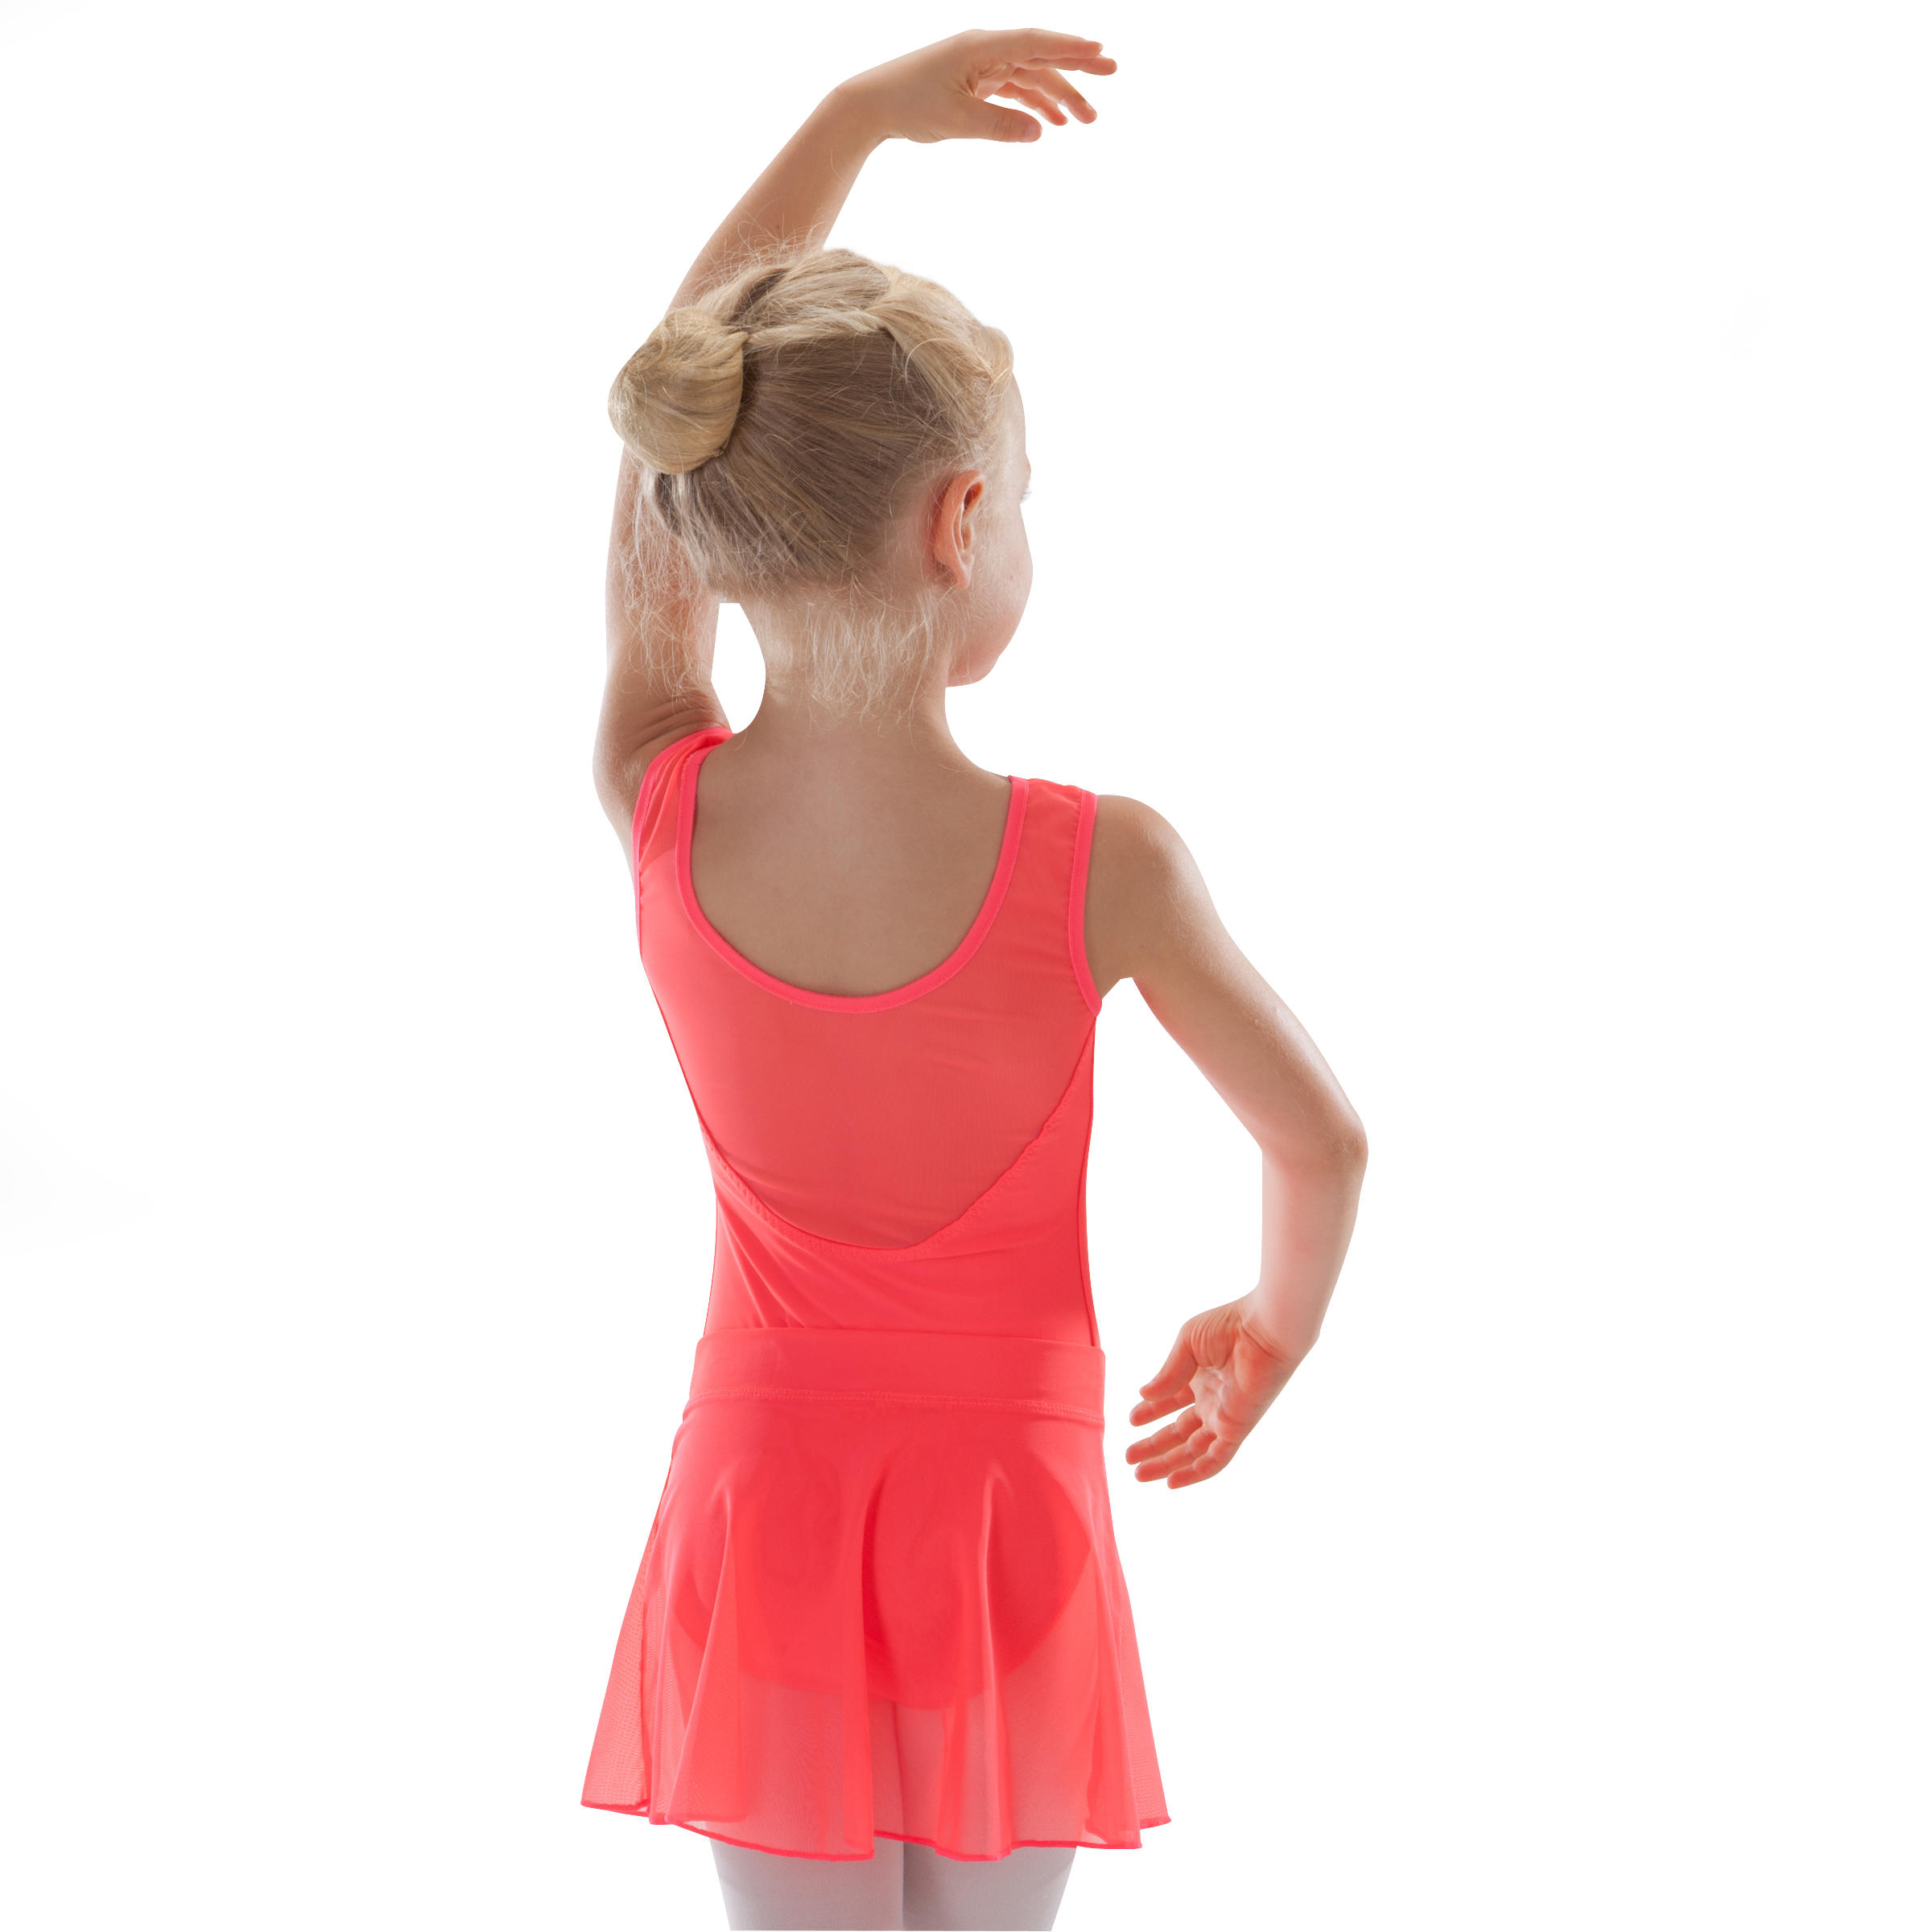 Girls' Voile Ballet Skirt - Coral 5/6